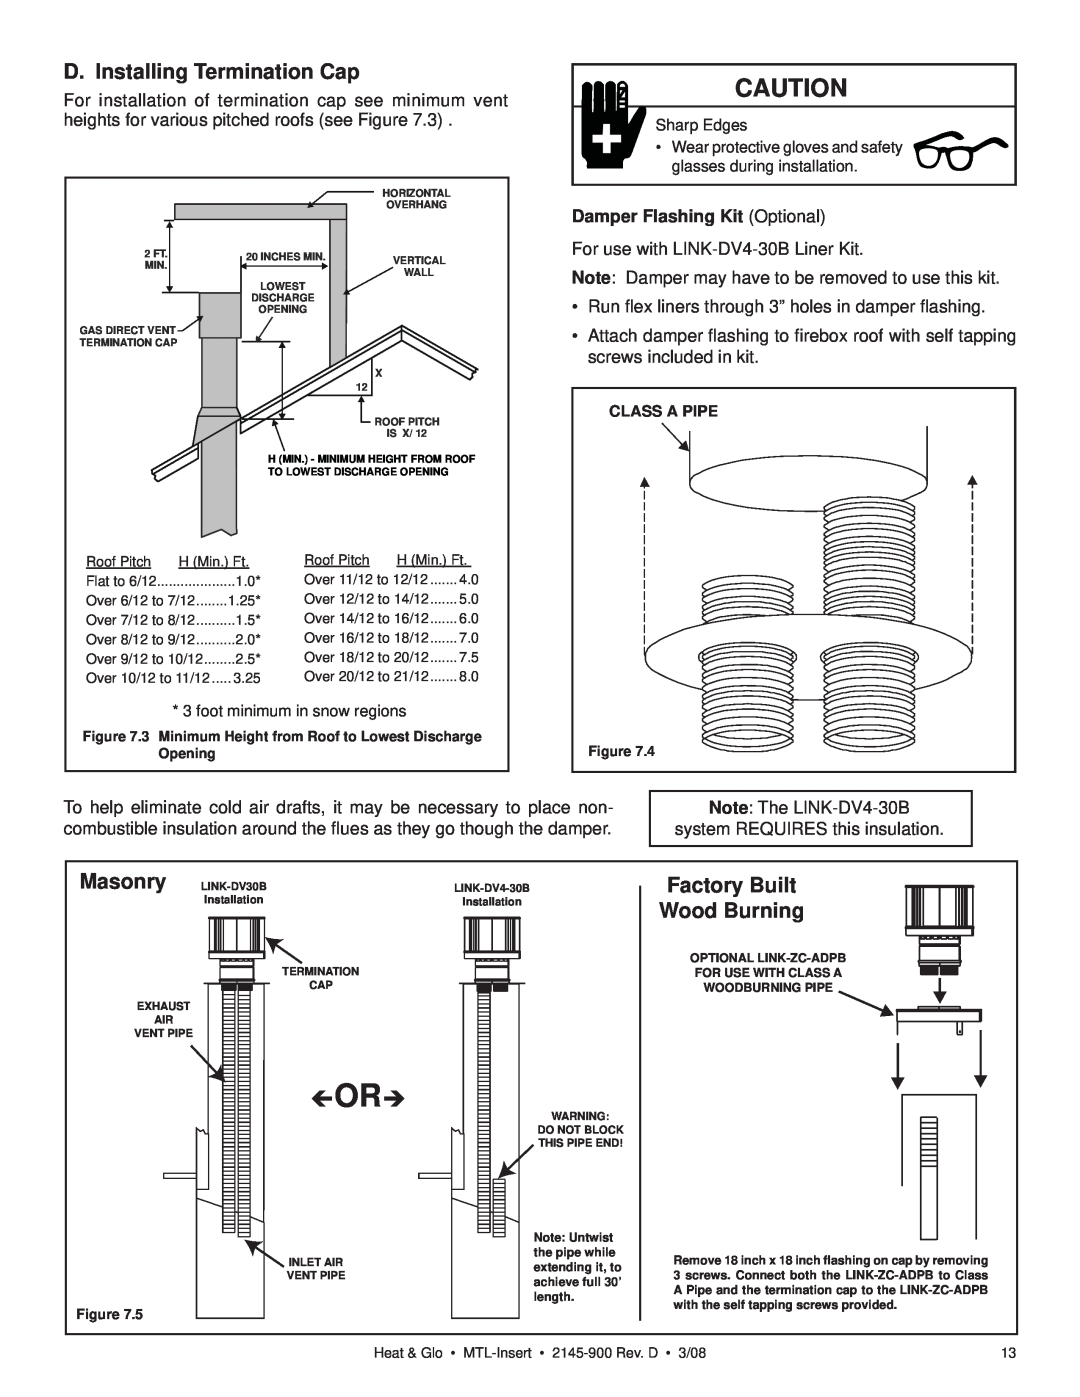 Heat & Glo LifeStyle MTL-INSERT owner manual D. Installing Termination Cap, Factory Built Wood Burning, Íorî 